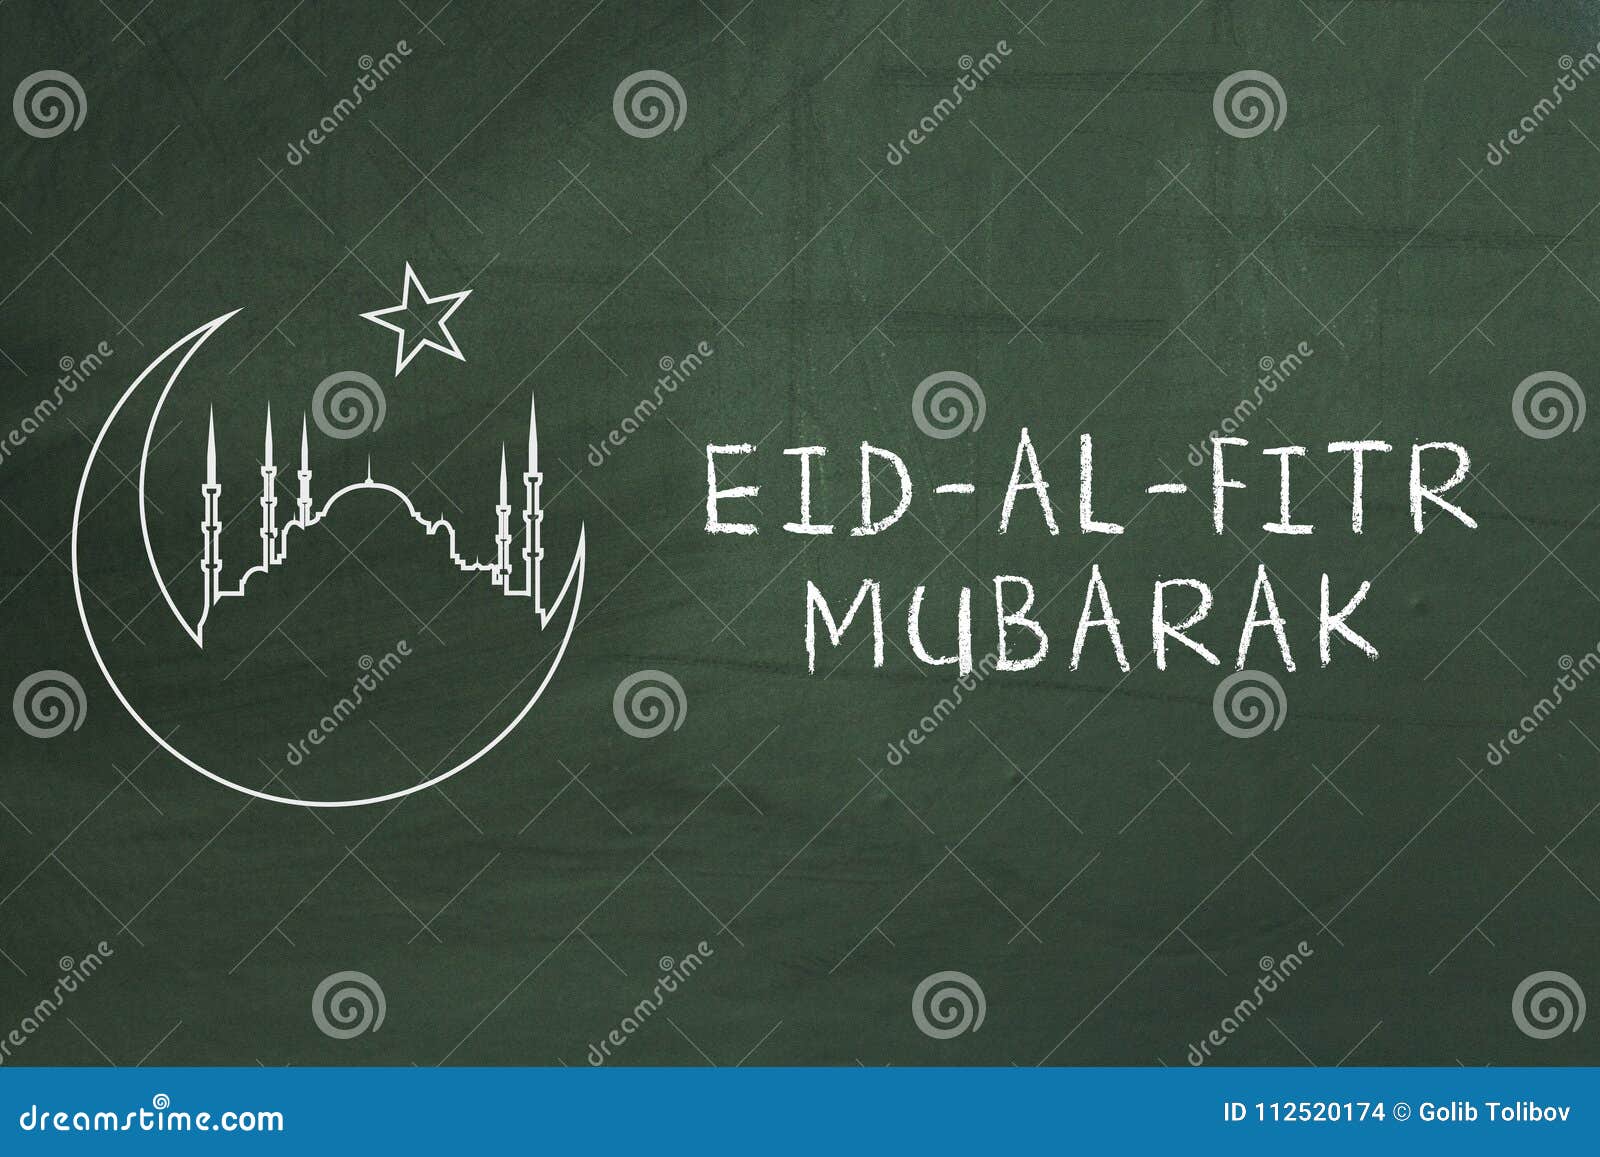 eid-al-fitr mubarak text on green blackboard. welcoming ramadan.